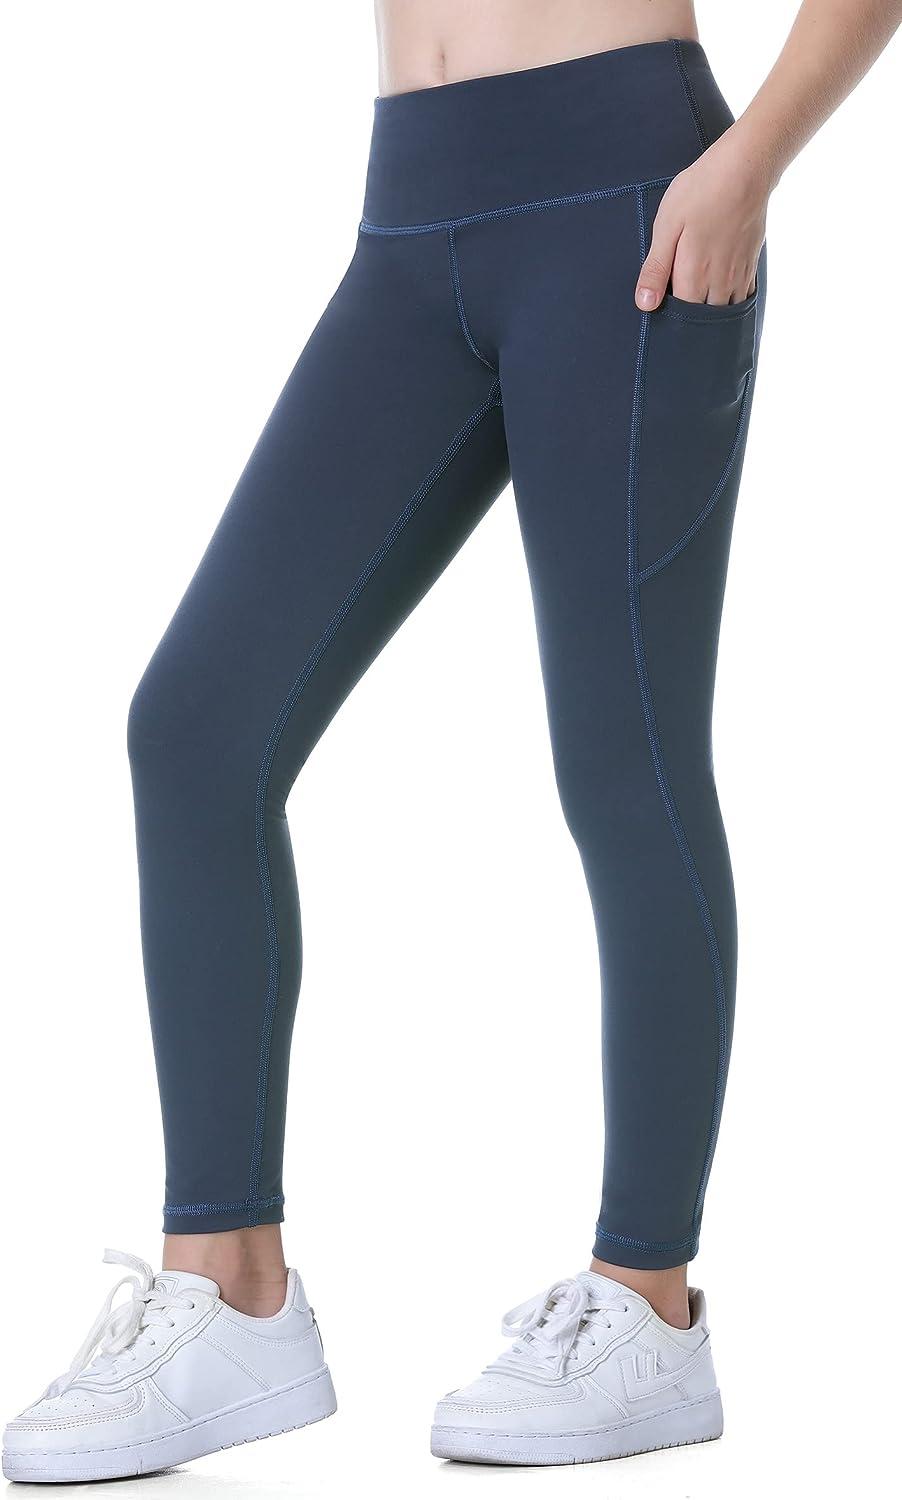  Heathyoga Women's Yoga Pants Leggings with Pockets for